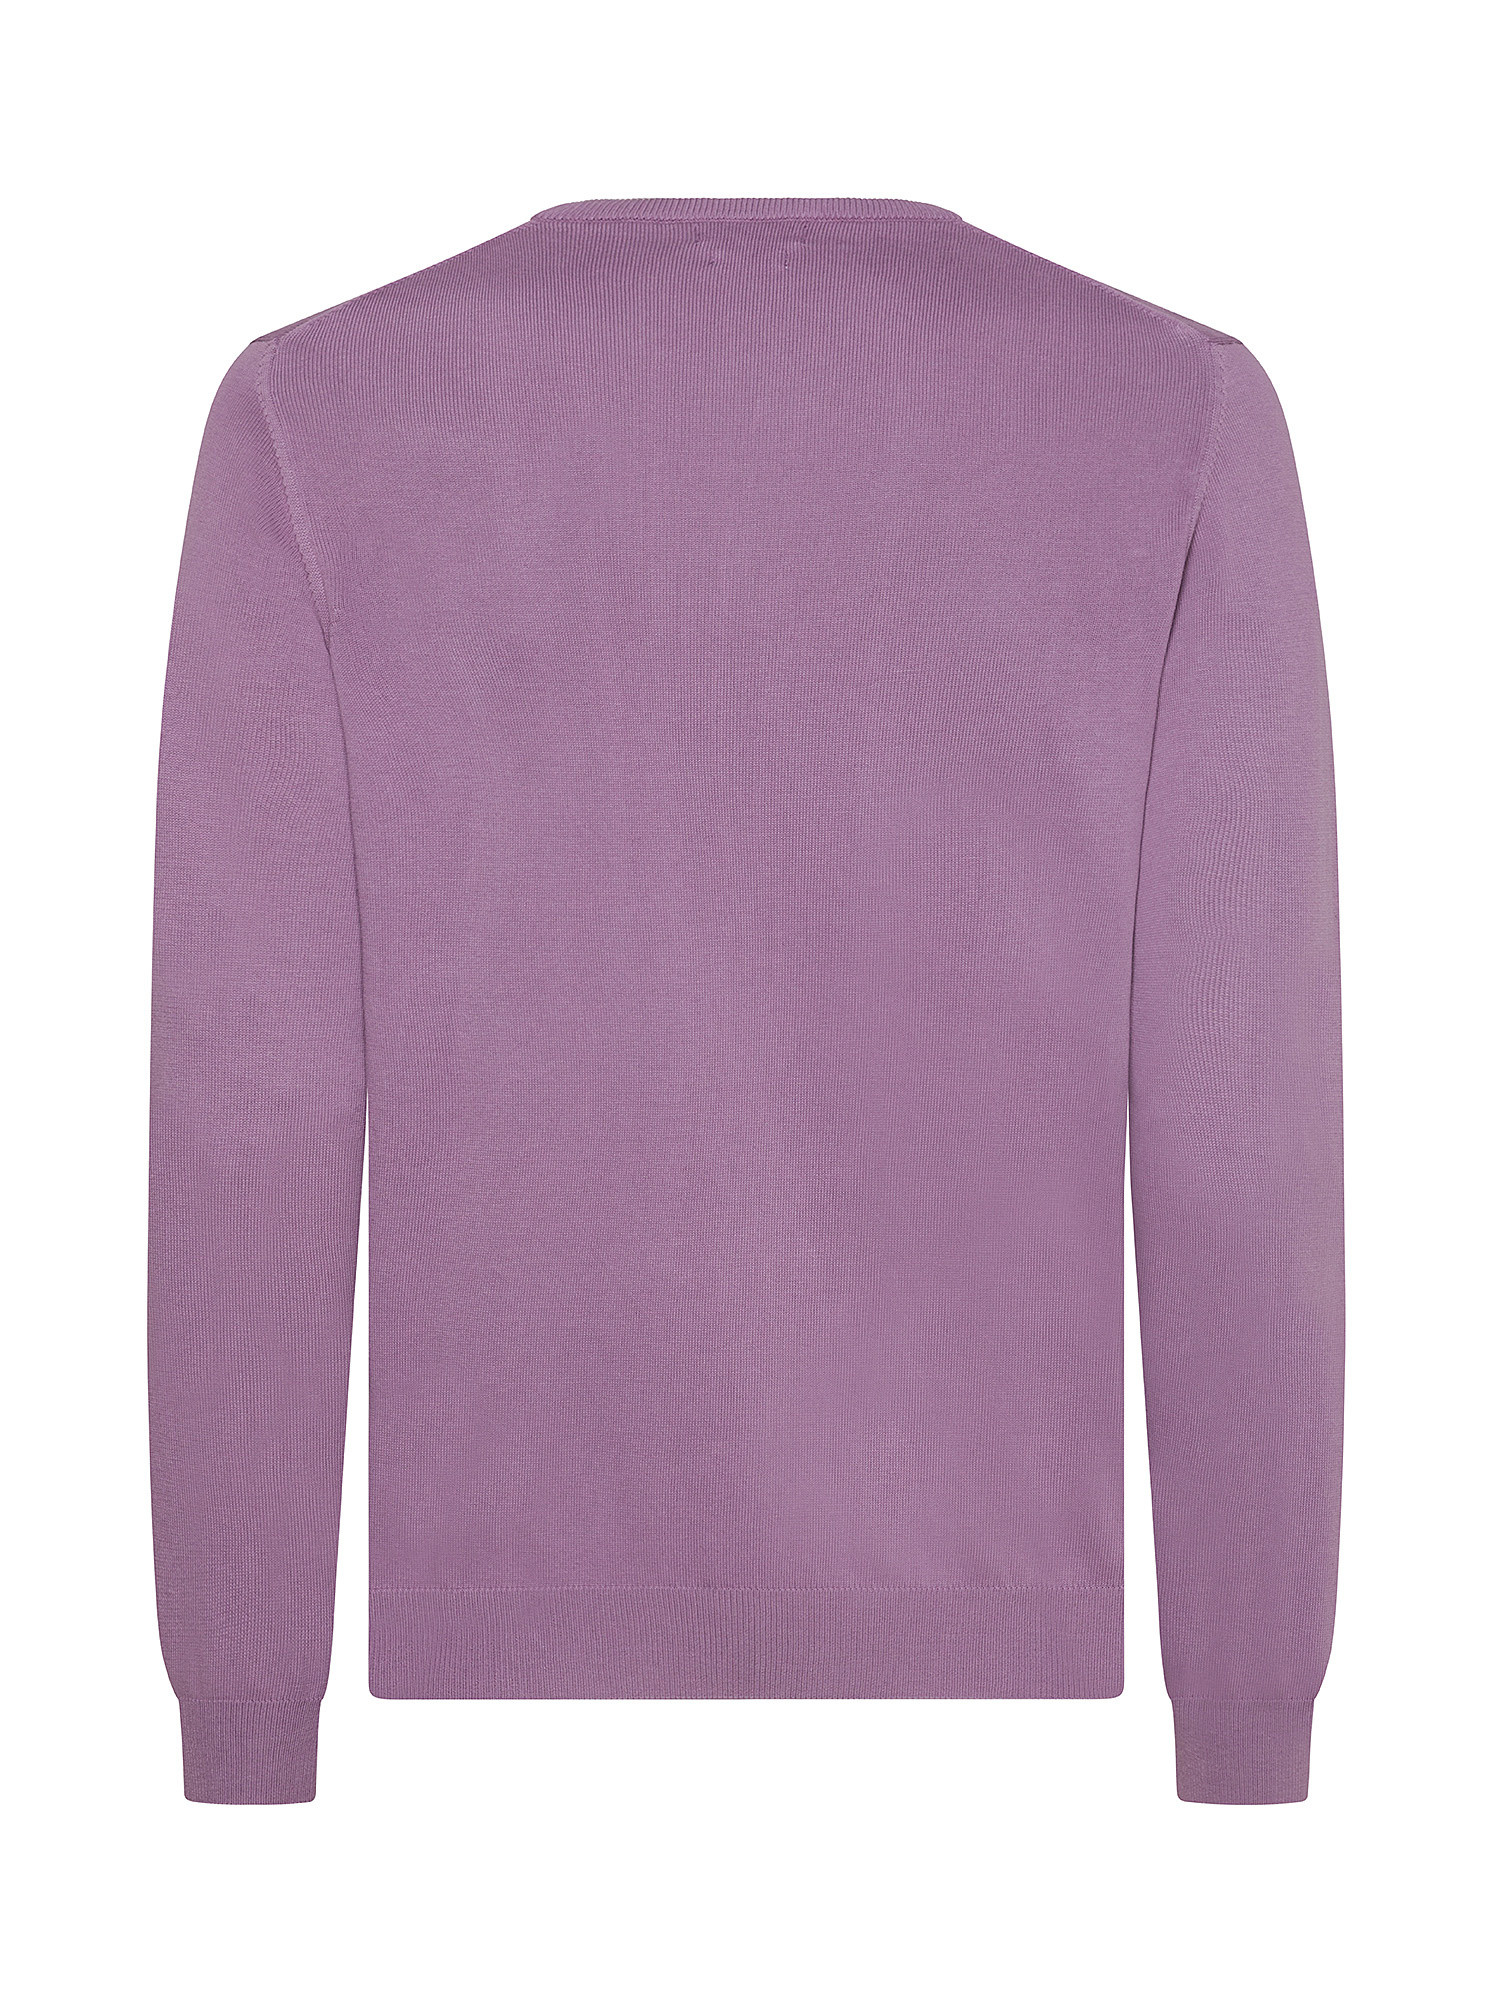 Luca D'Altieri - Crew neck sweater in extrafine pure cotton, Purple Lilac, large image number 1